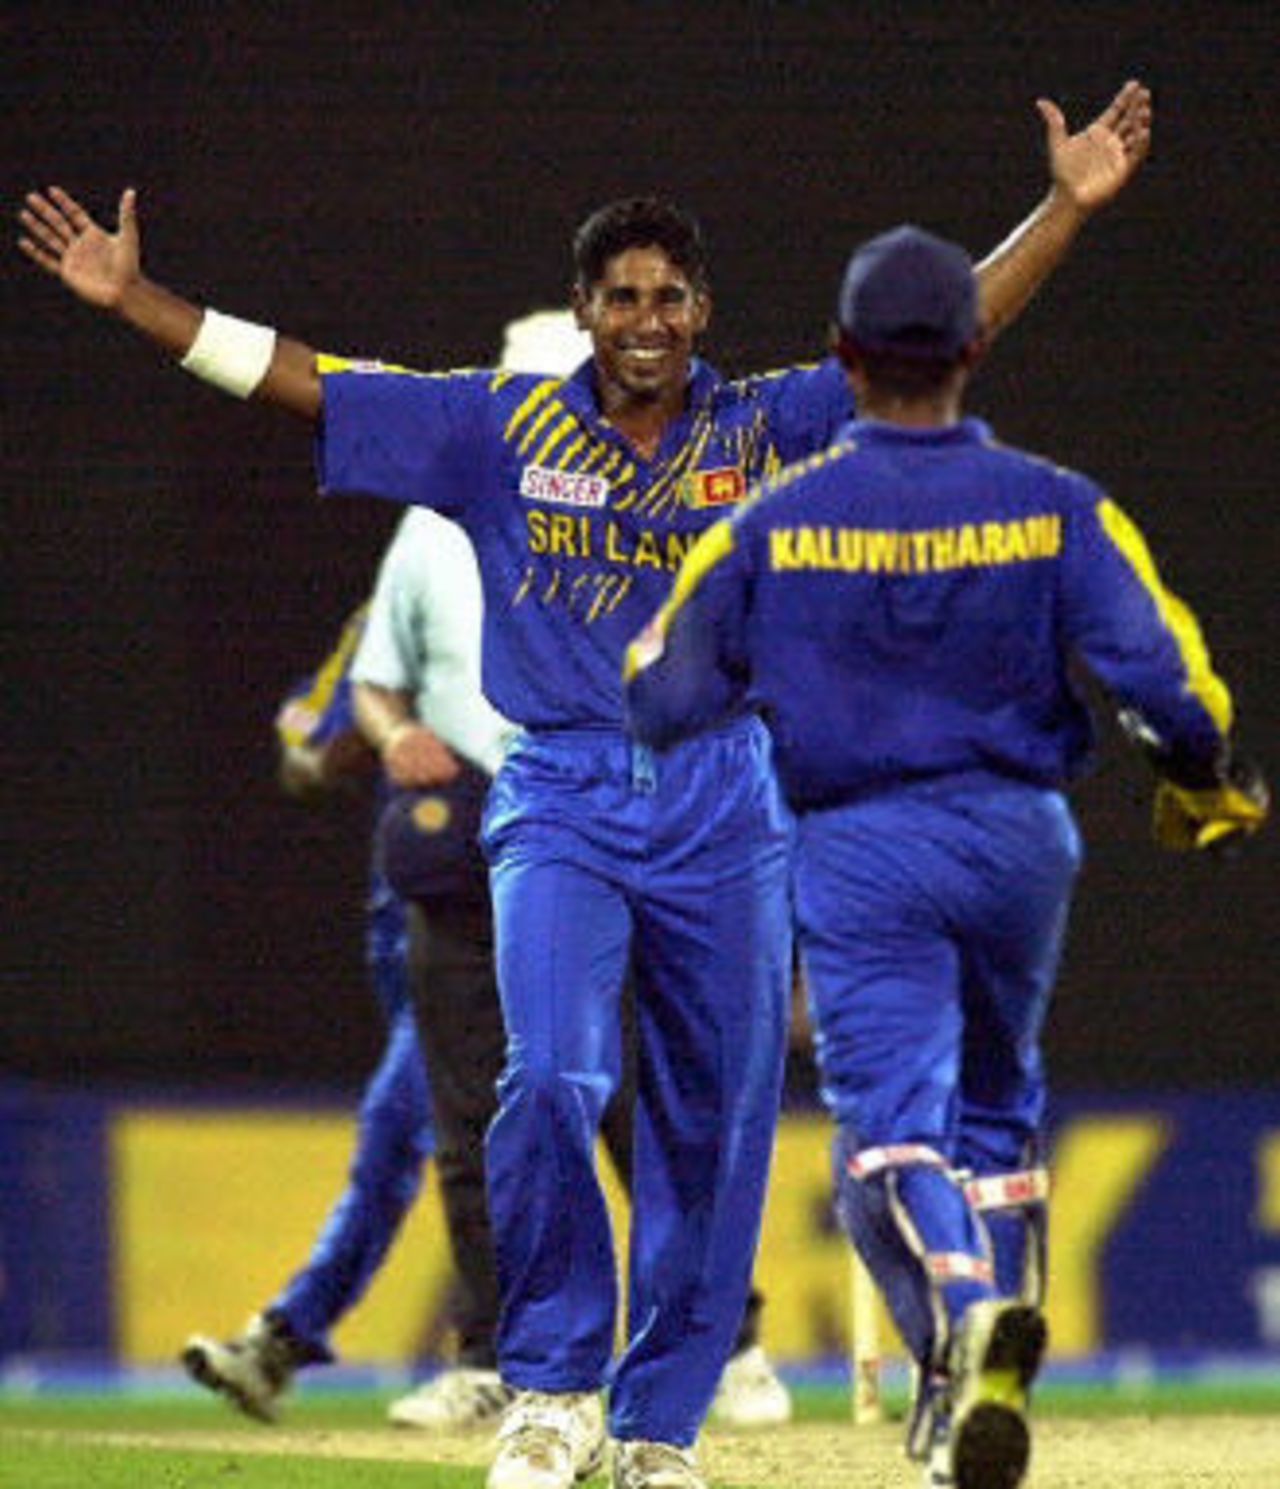 Chaminda Vaas celebrates the wicket of Inzamam-ul-Haq with Romesh Kaluwitharana, Final at Sharjah, Pakistan v Sri Lanka, 20 April 2001